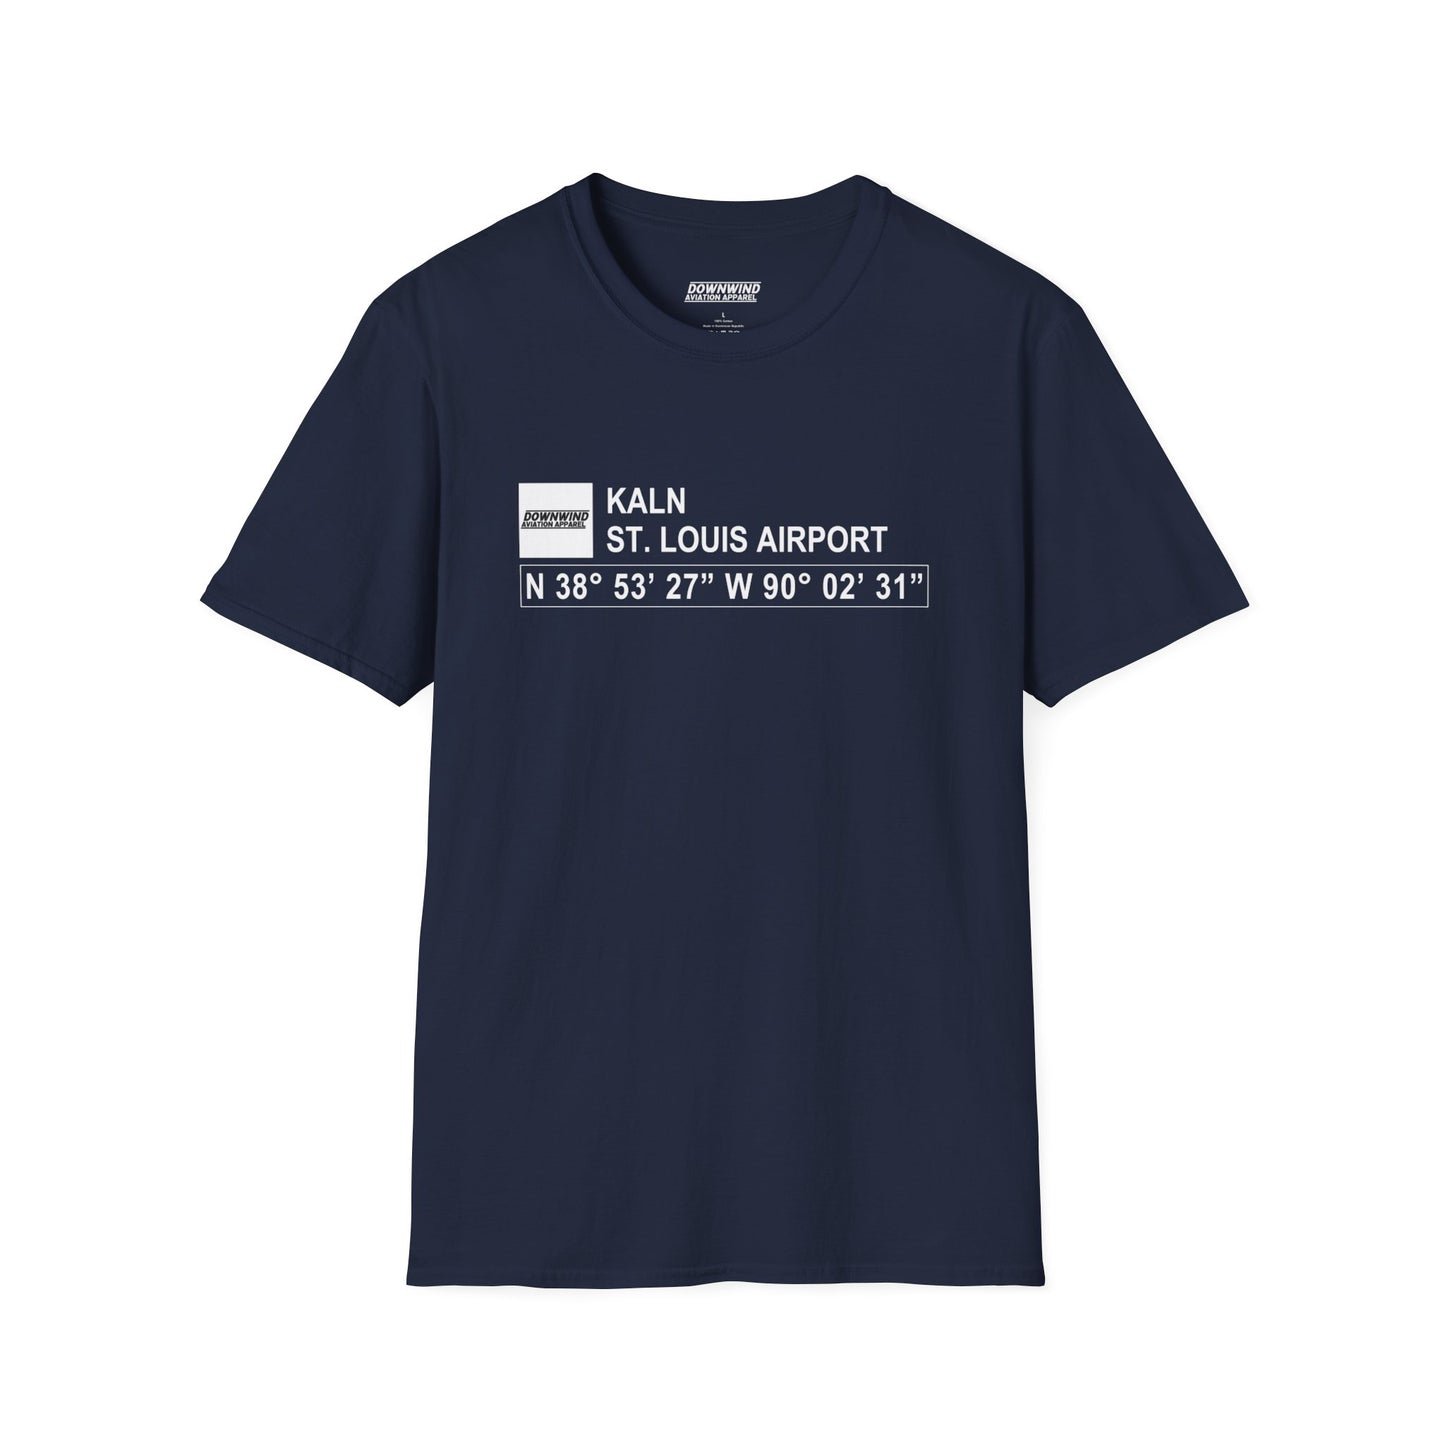 KALN / St. Louis Airport T-Shirt